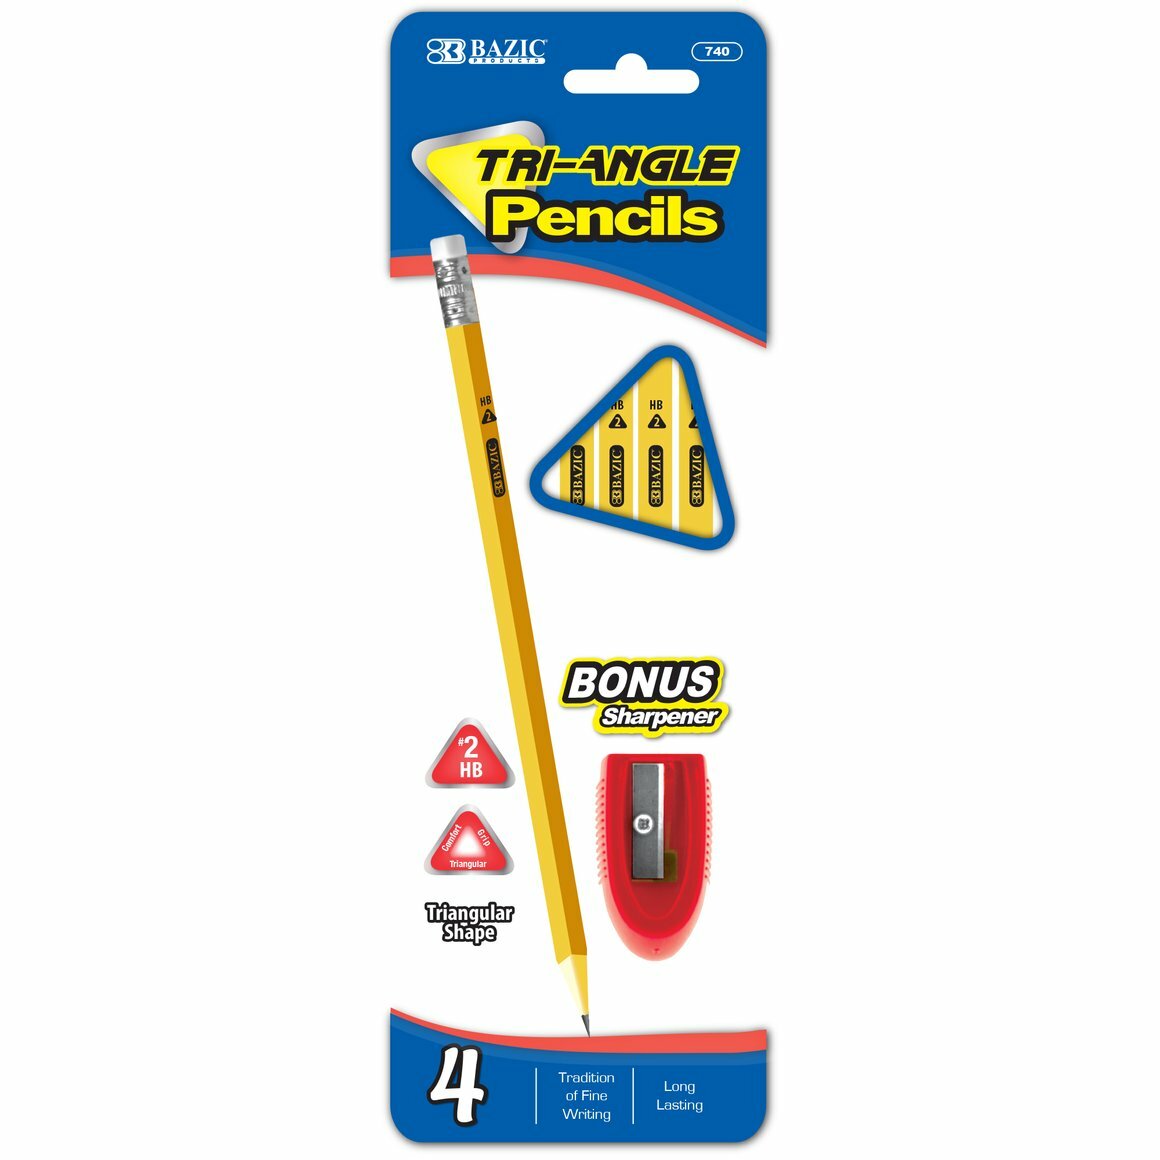 Pencil #2/Triangle (BAZ 740)